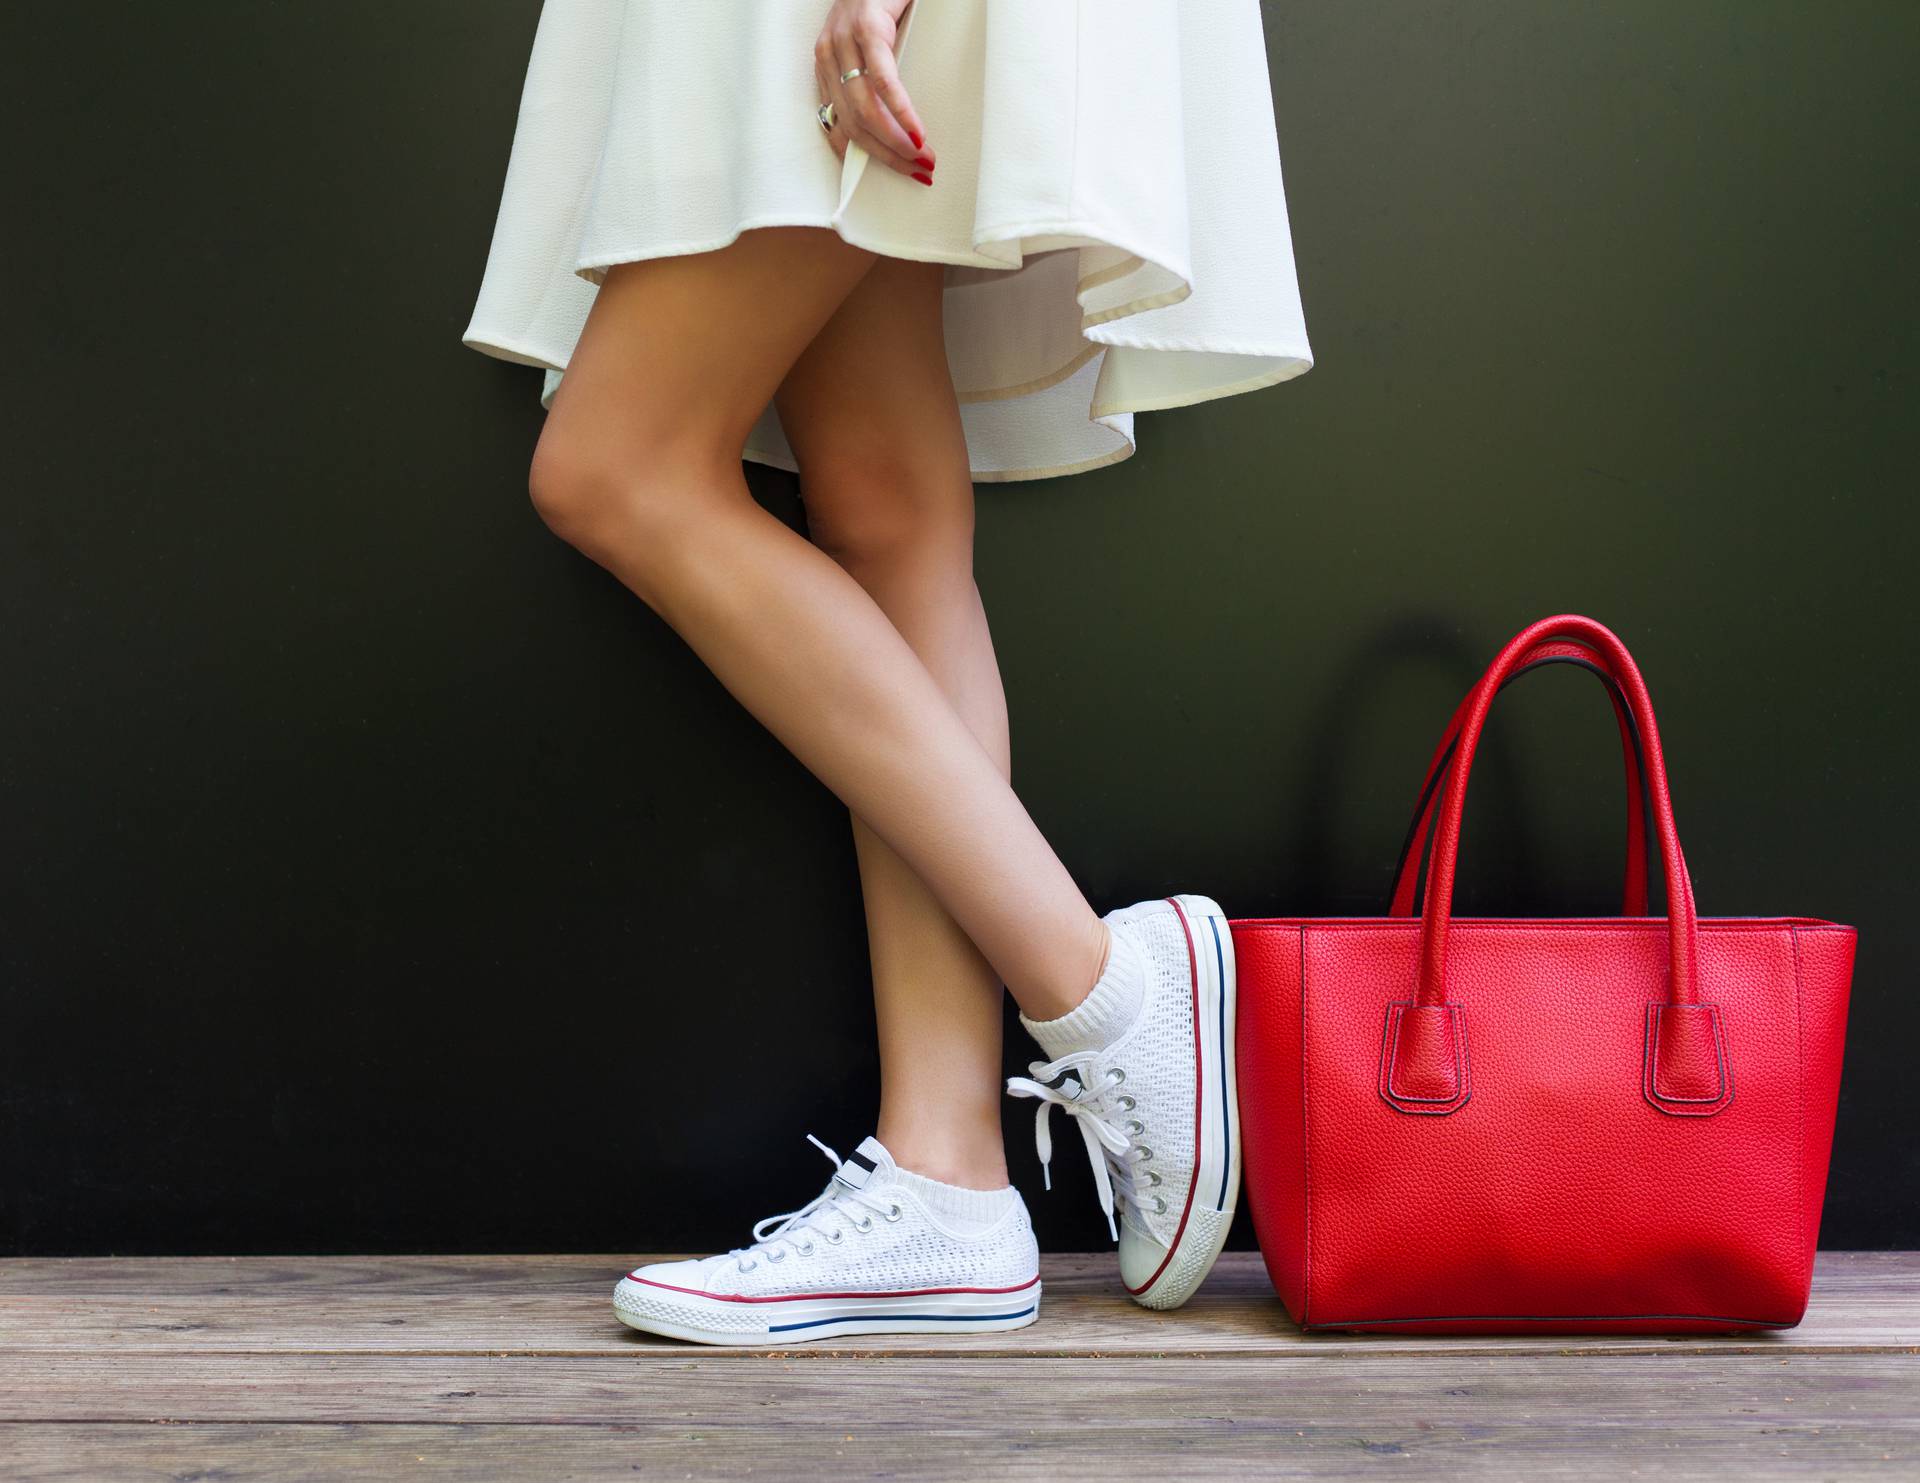 Beautiful fashionable big red handbag standing next to leggy woman